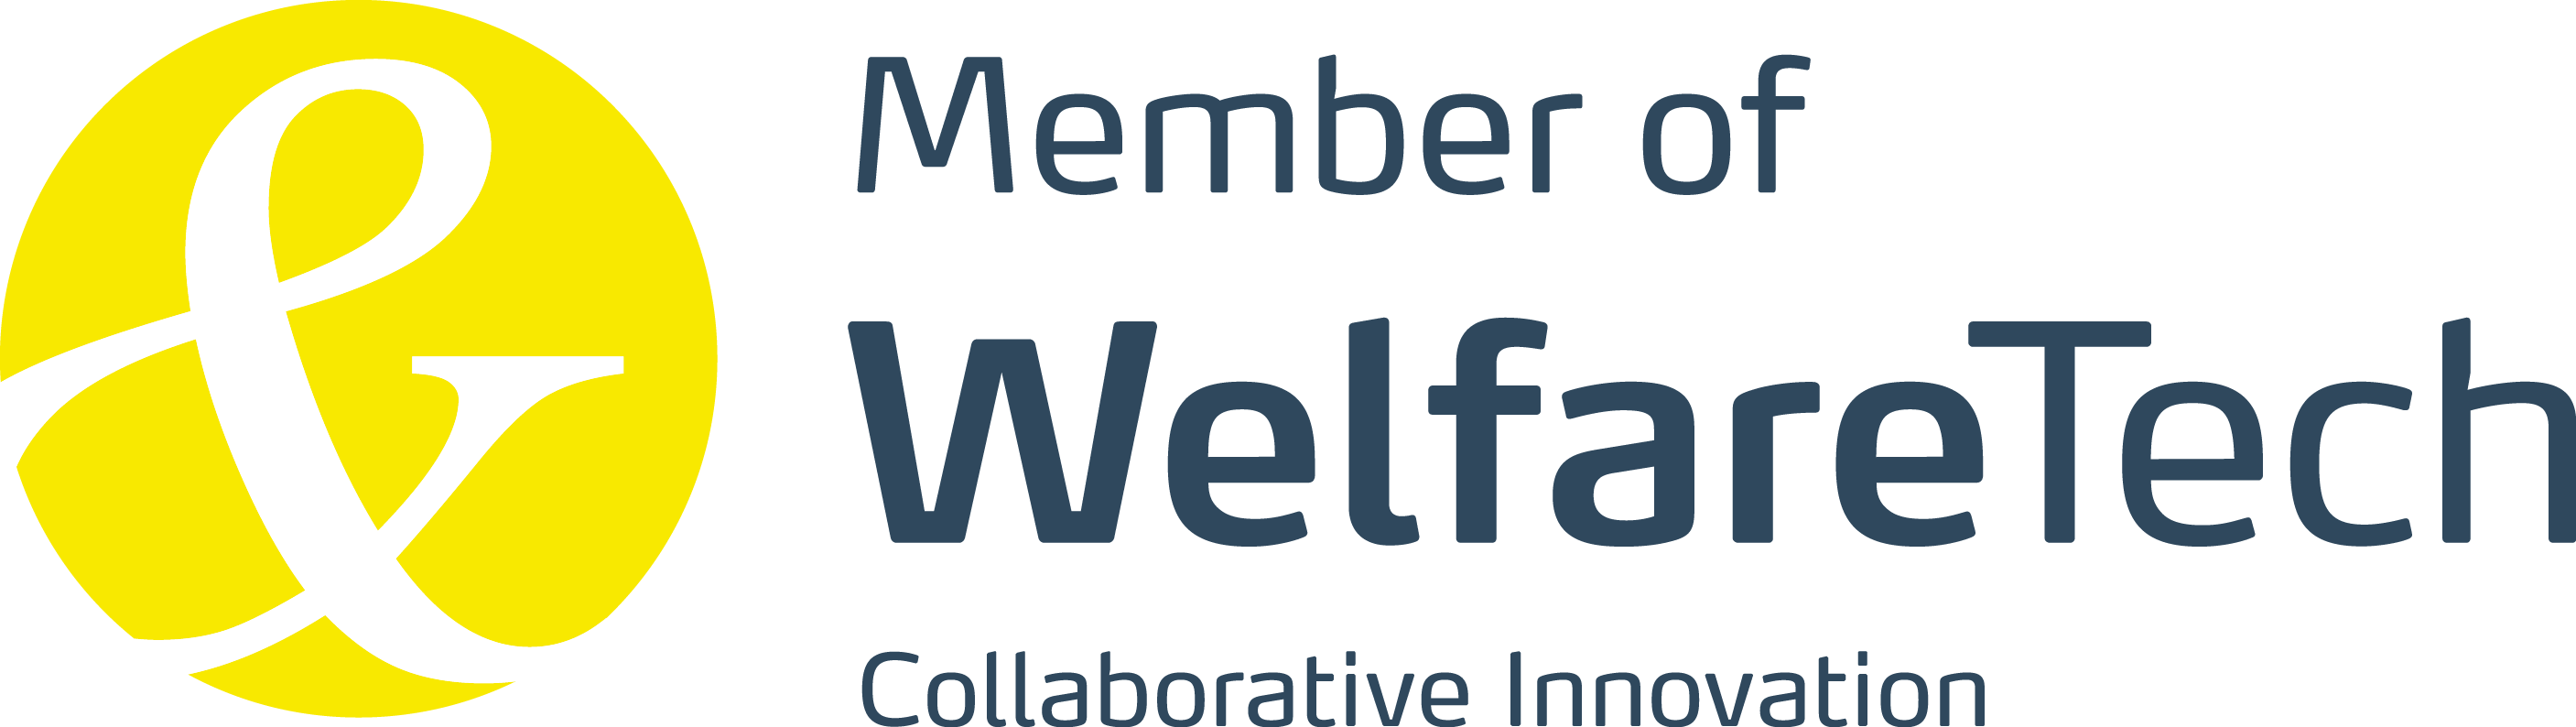 WelfareTech Member